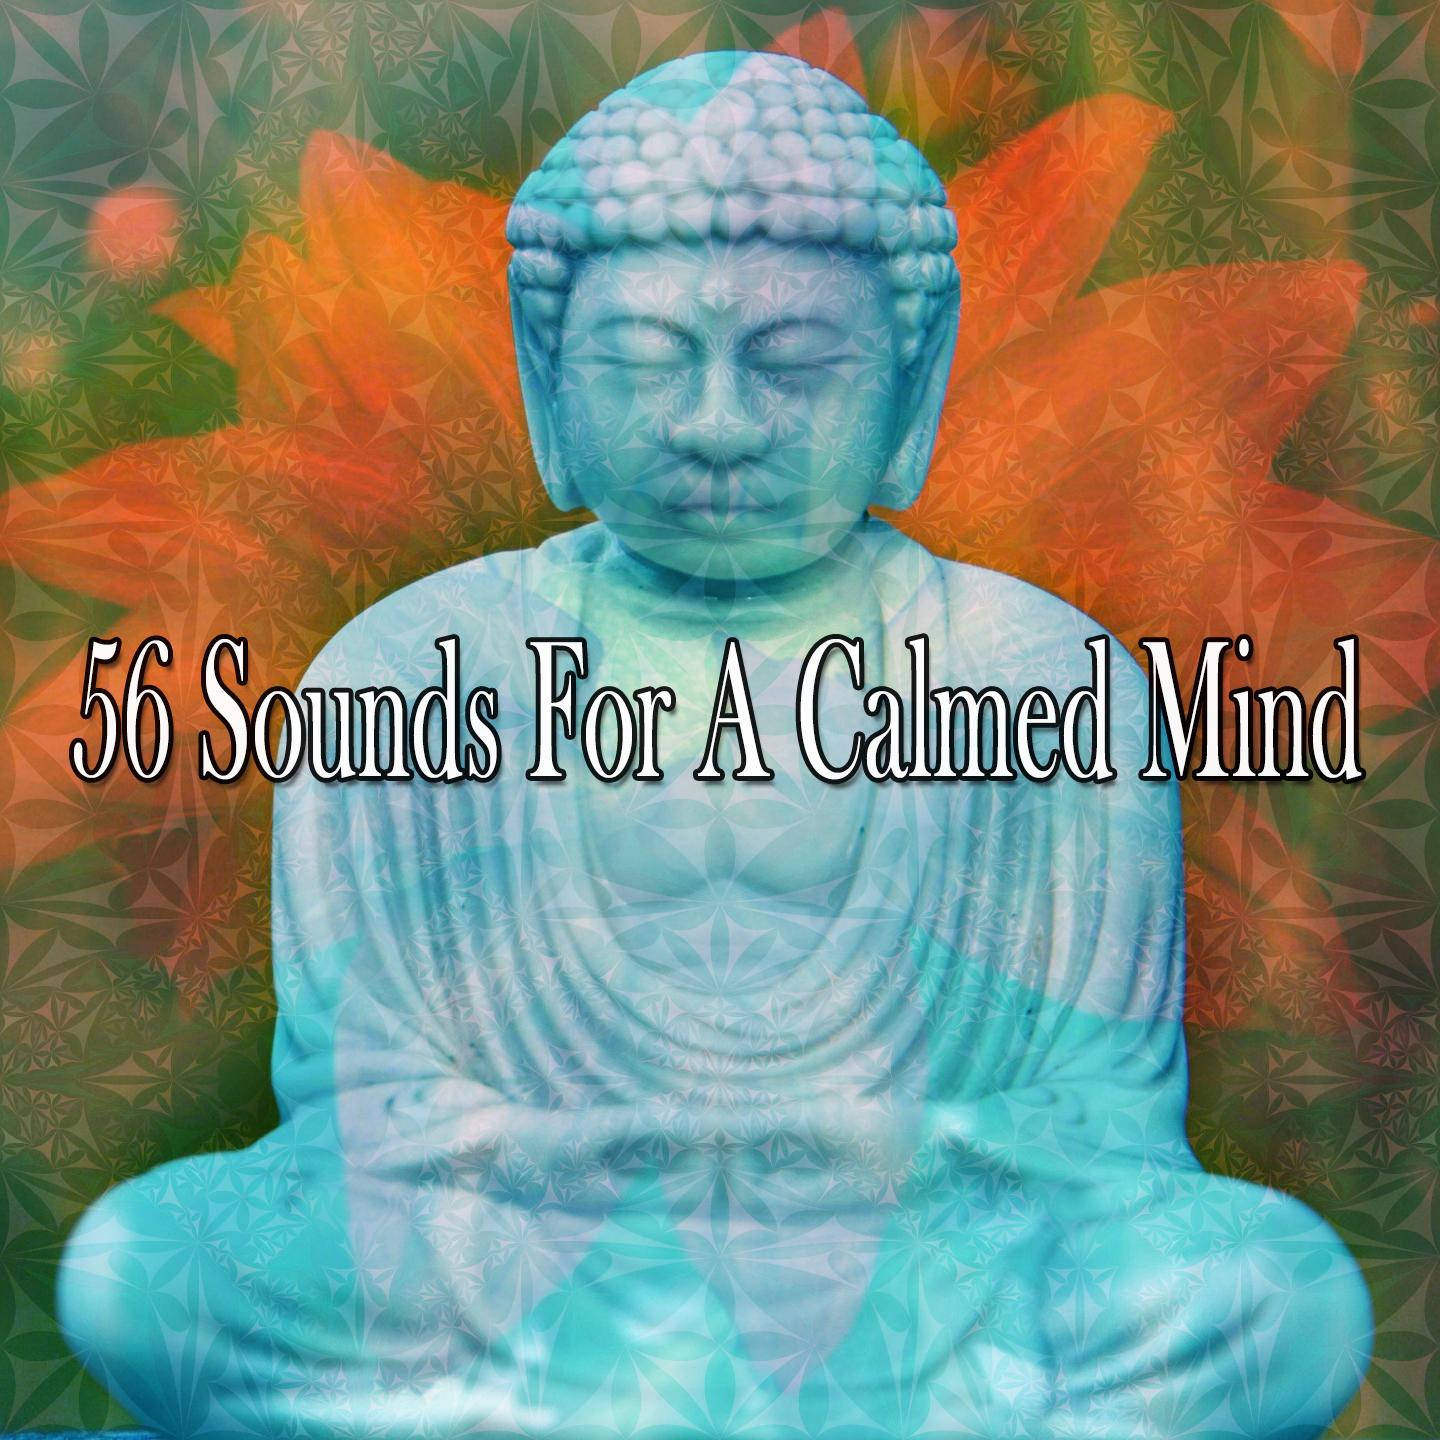 Buddhist Beat